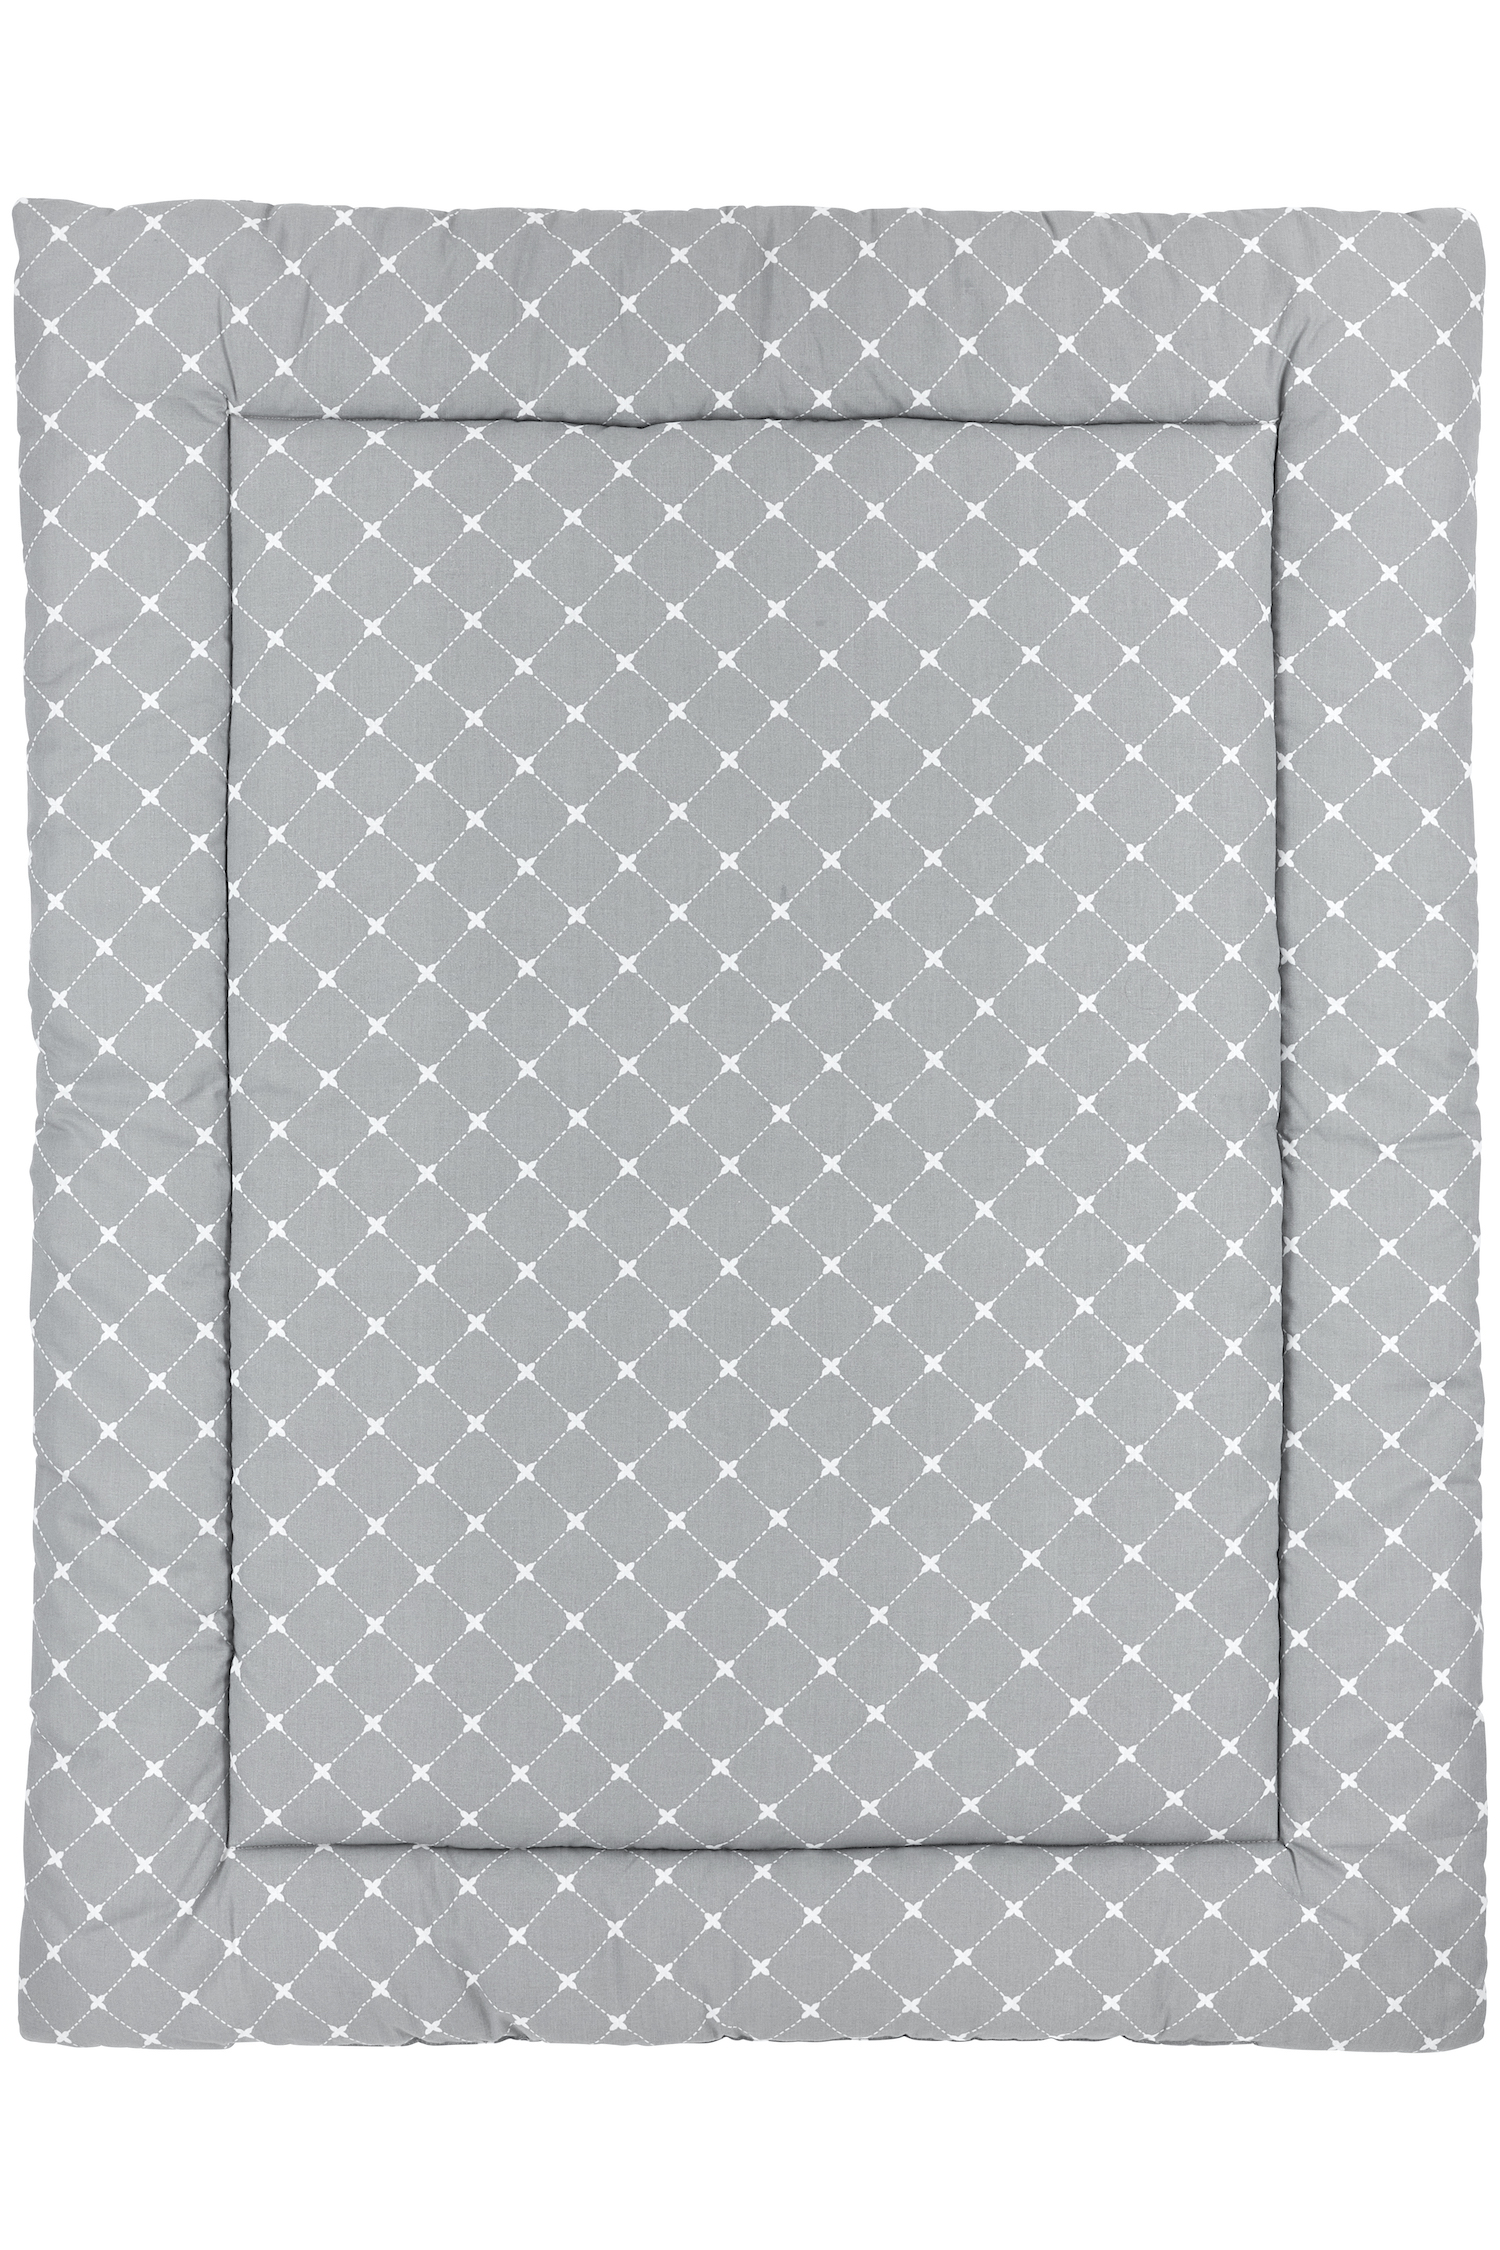 Playpen mattress - grey - 80x100cm